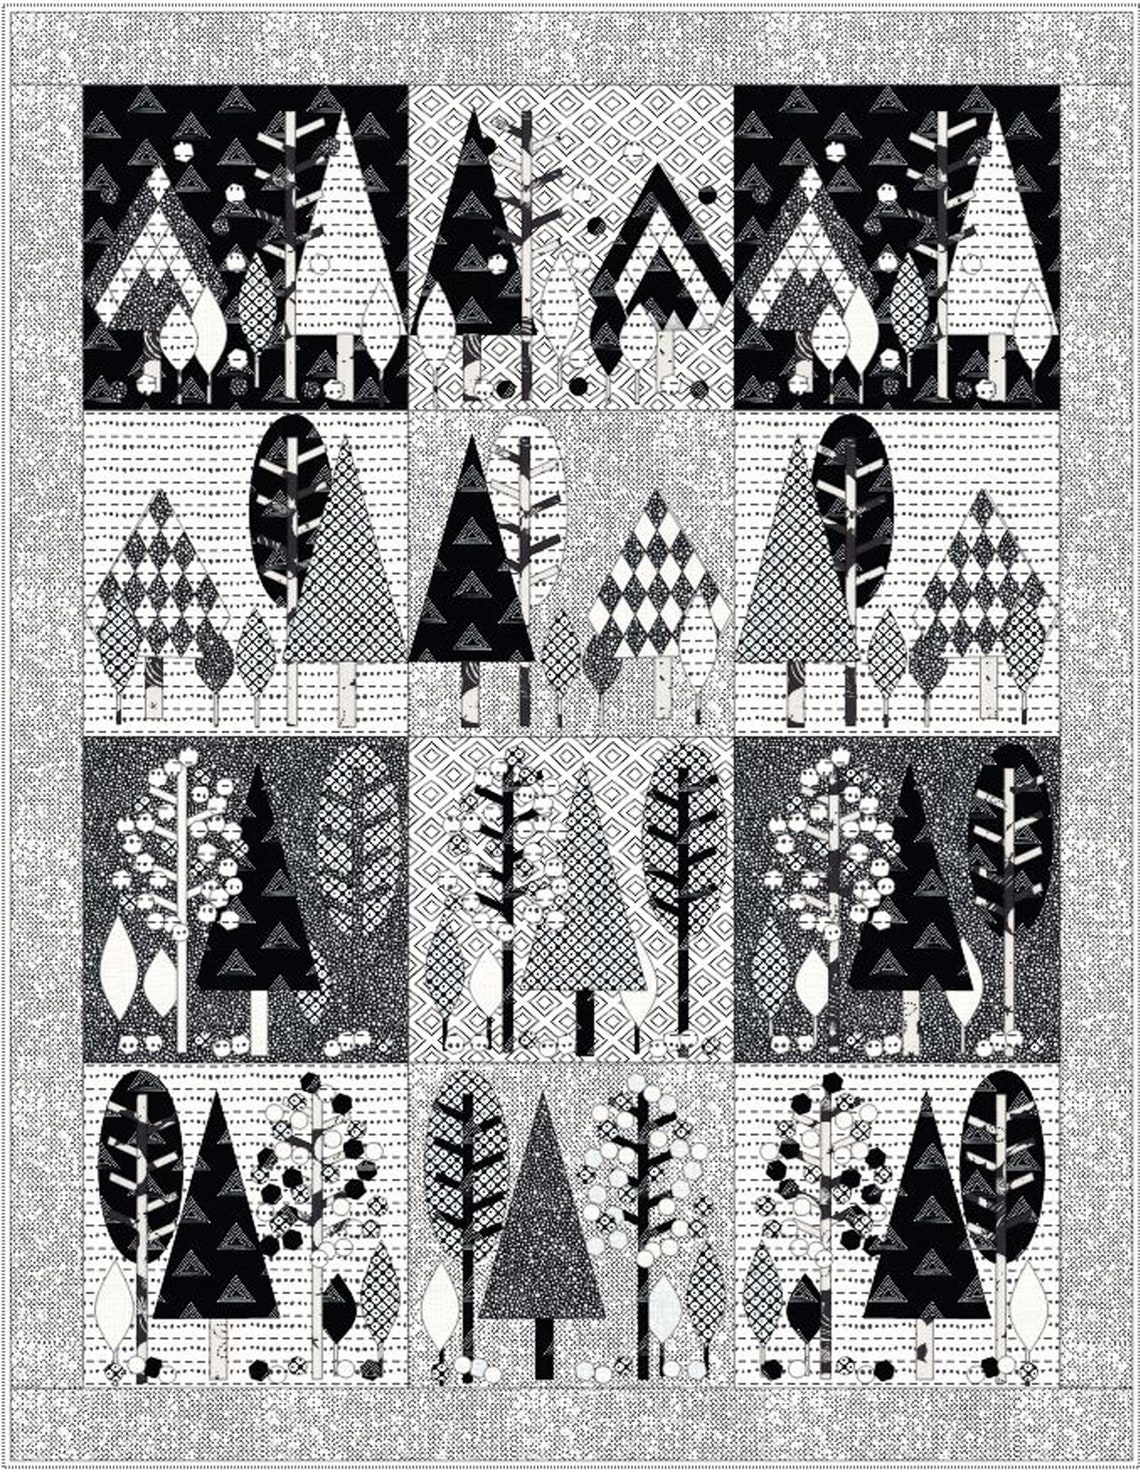 4 Seasons Art Quilt Pattern Modern Design Trees - Etsy